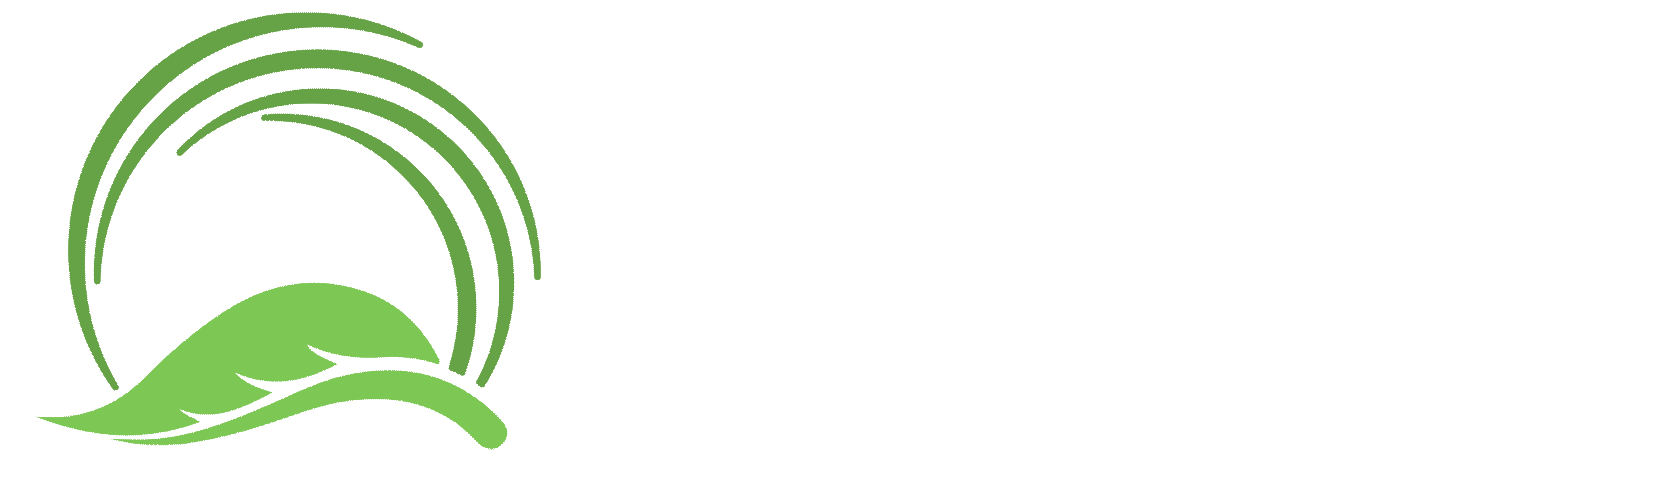 Georgia Green Commercial Landscaping | Atlanta Landscape Services - Landscaping Services in the Metro Atlanta Area